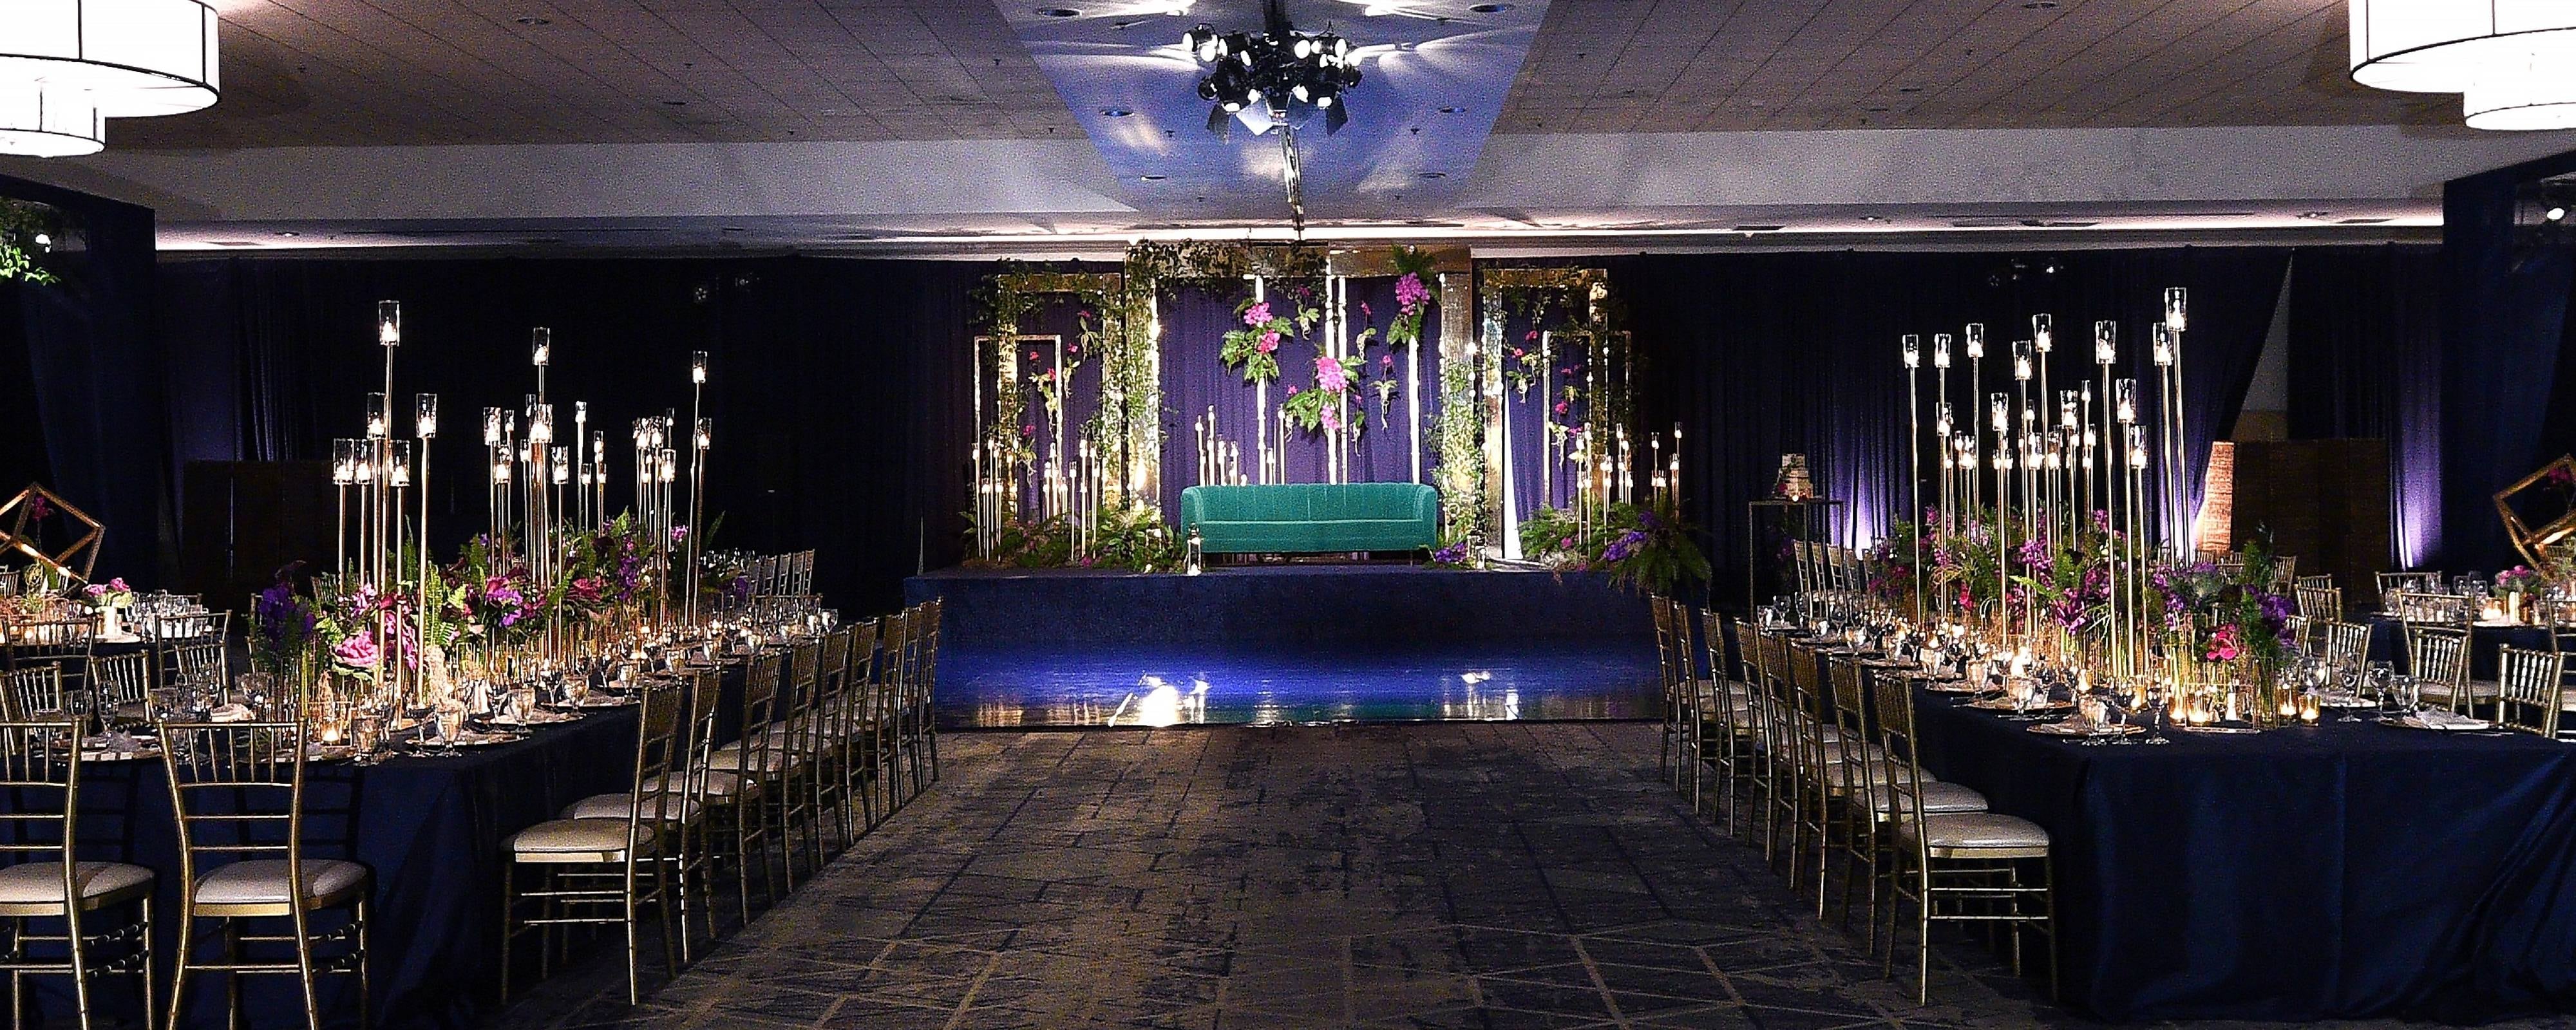 Wedding Venue in Garden Grove, California | Delta Hotels ...